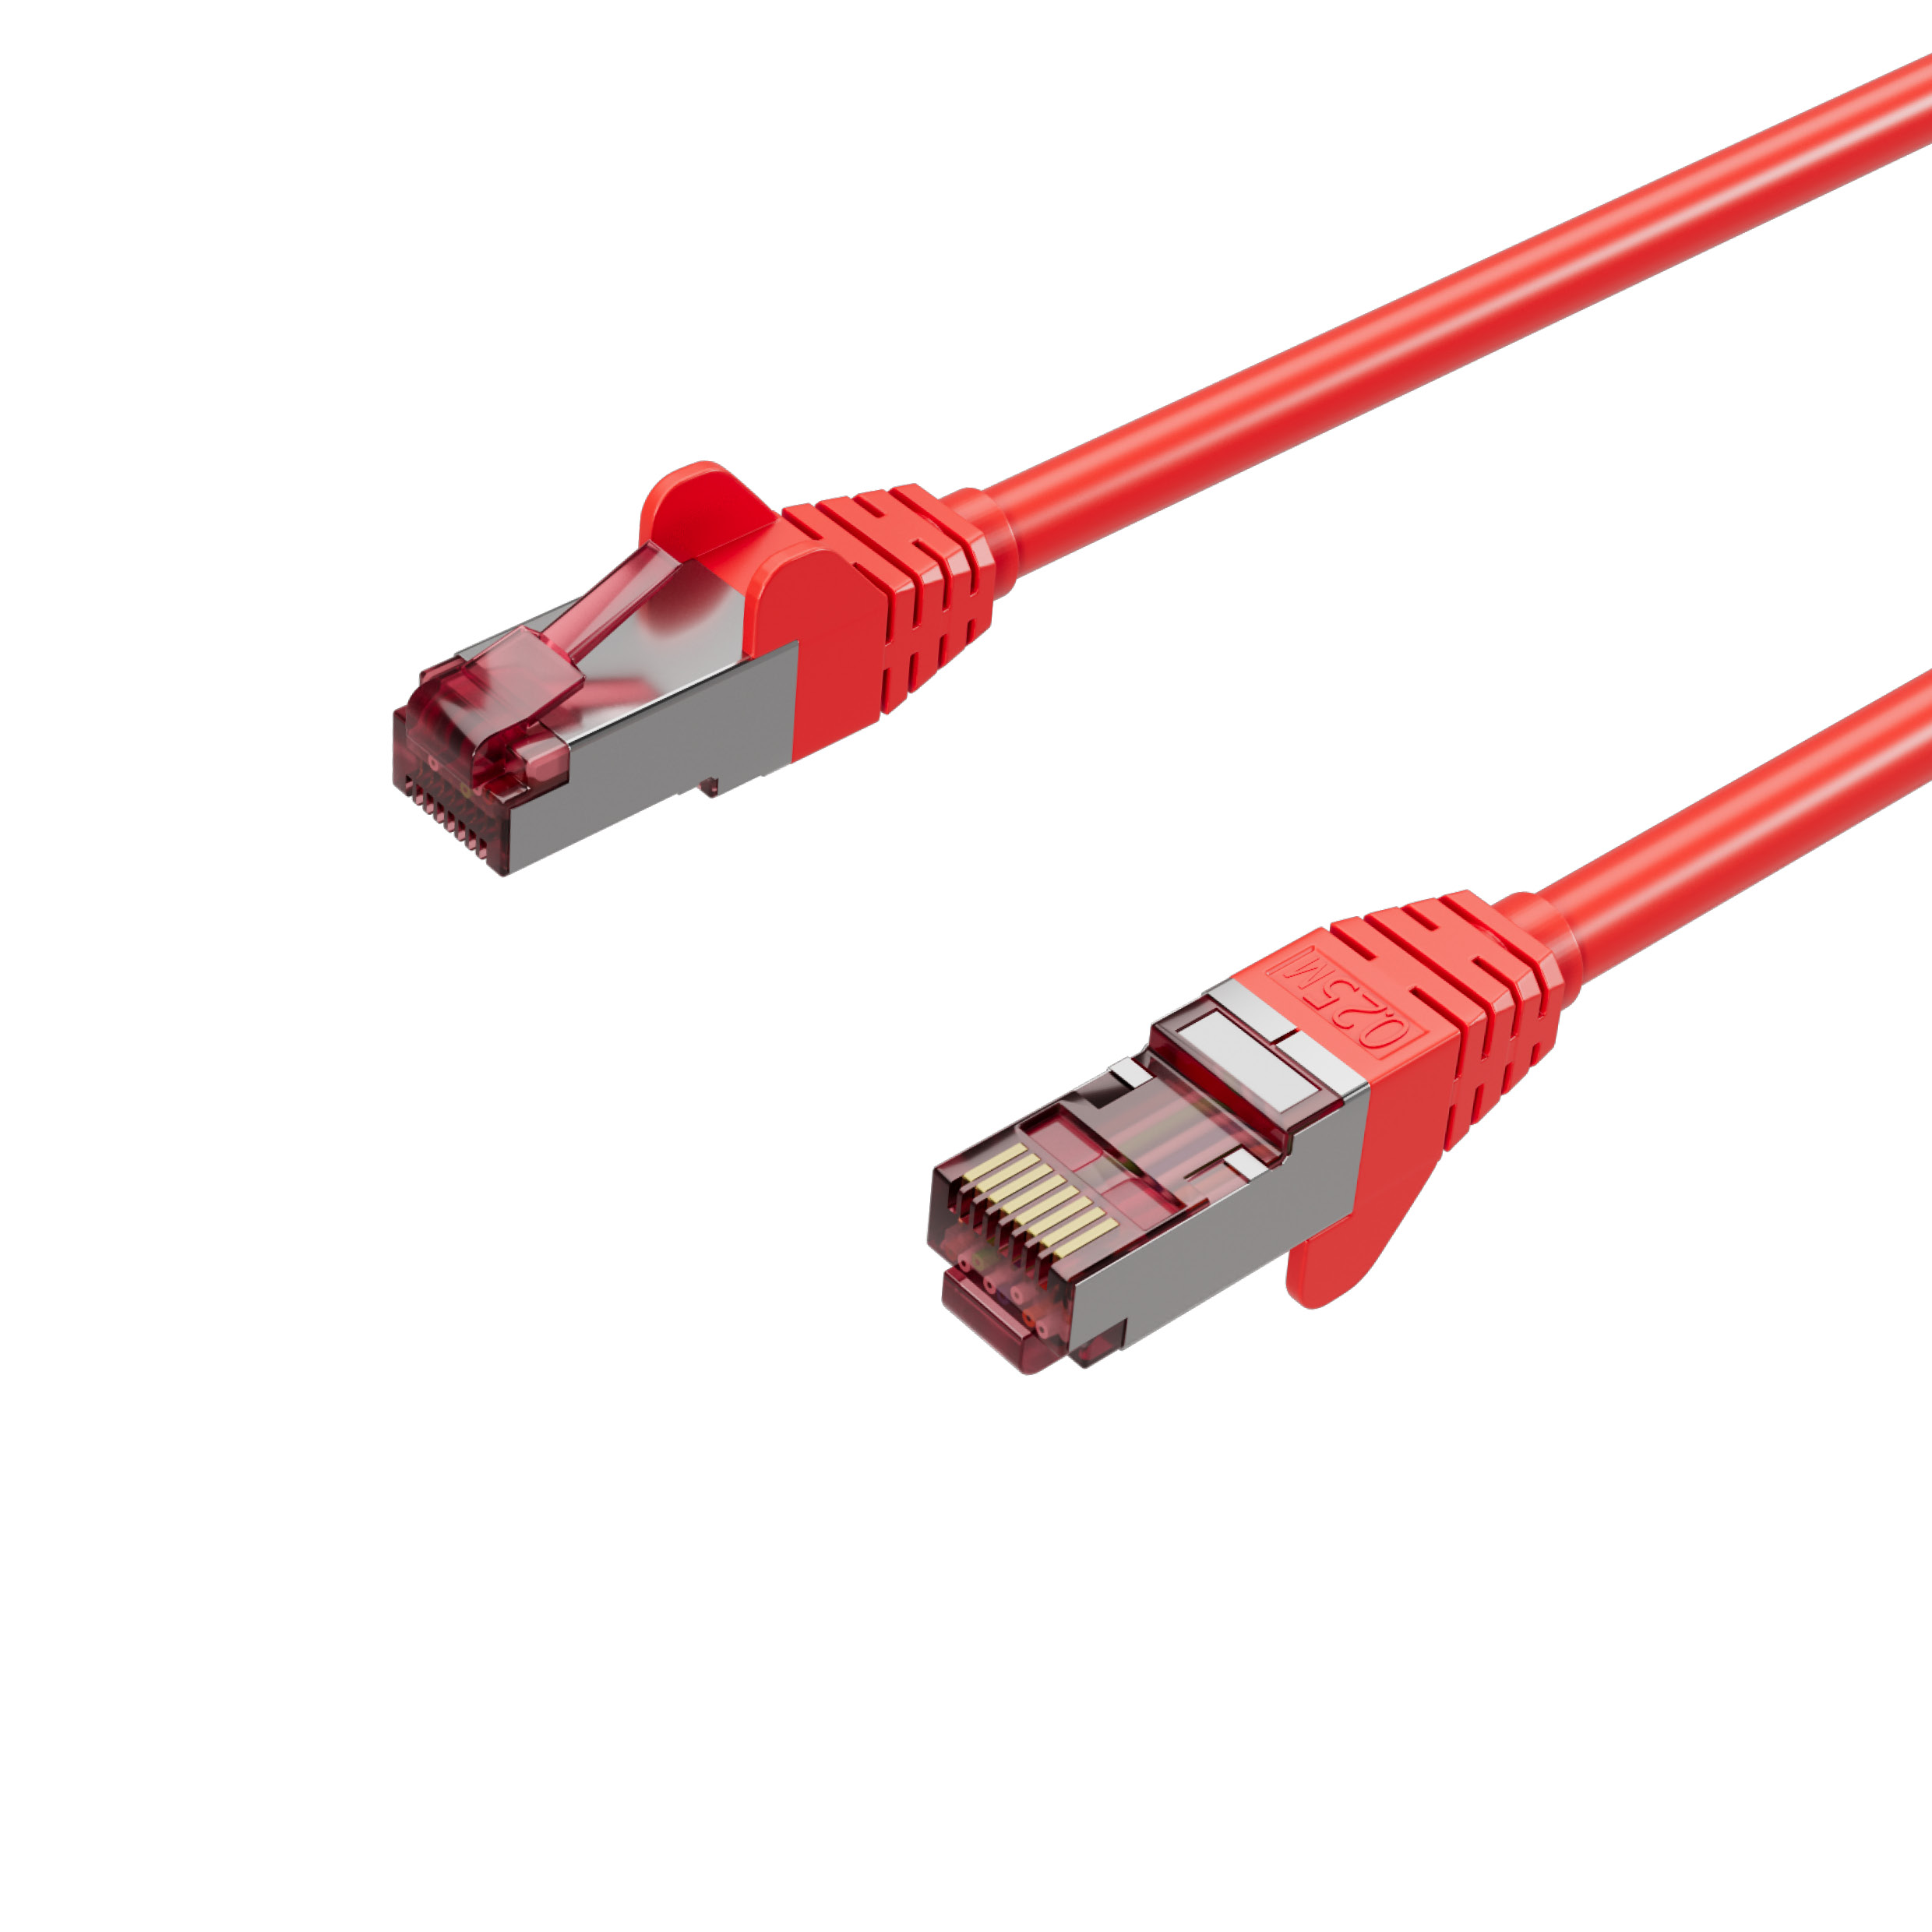 KABELBUDE Netzwerkkabel, RJ45 LAN, GHMT m 6A, Patchkabel 0,25 Ethernet Halogenfrei, RJ45, S/FTP, 0,25m, Rot PIMF, Cat